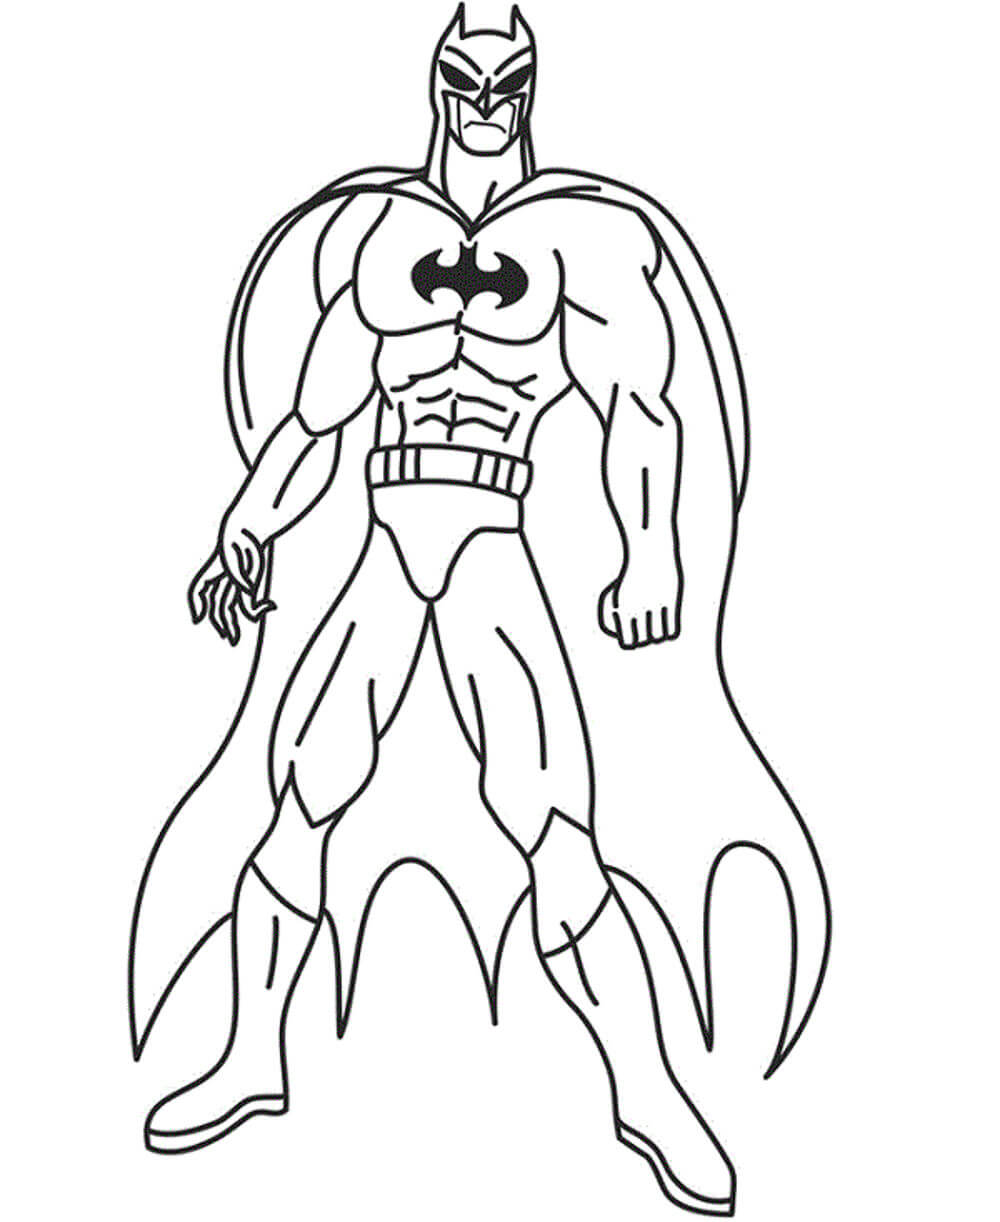 Impresionante Batman para colorear, imprimir e dibujar –